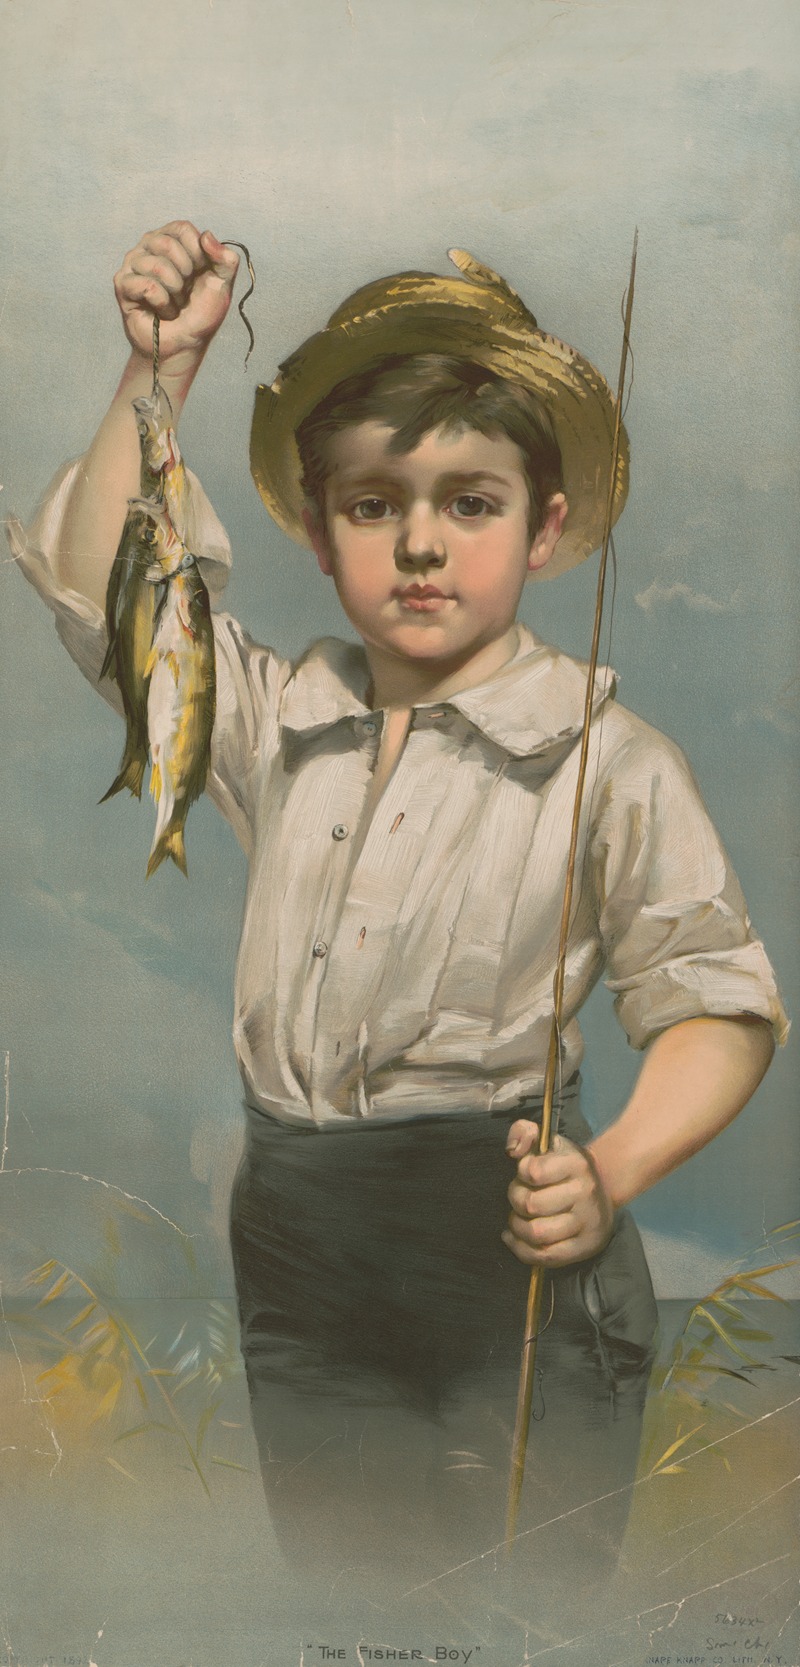 Knapp & Co. - The fisher boy